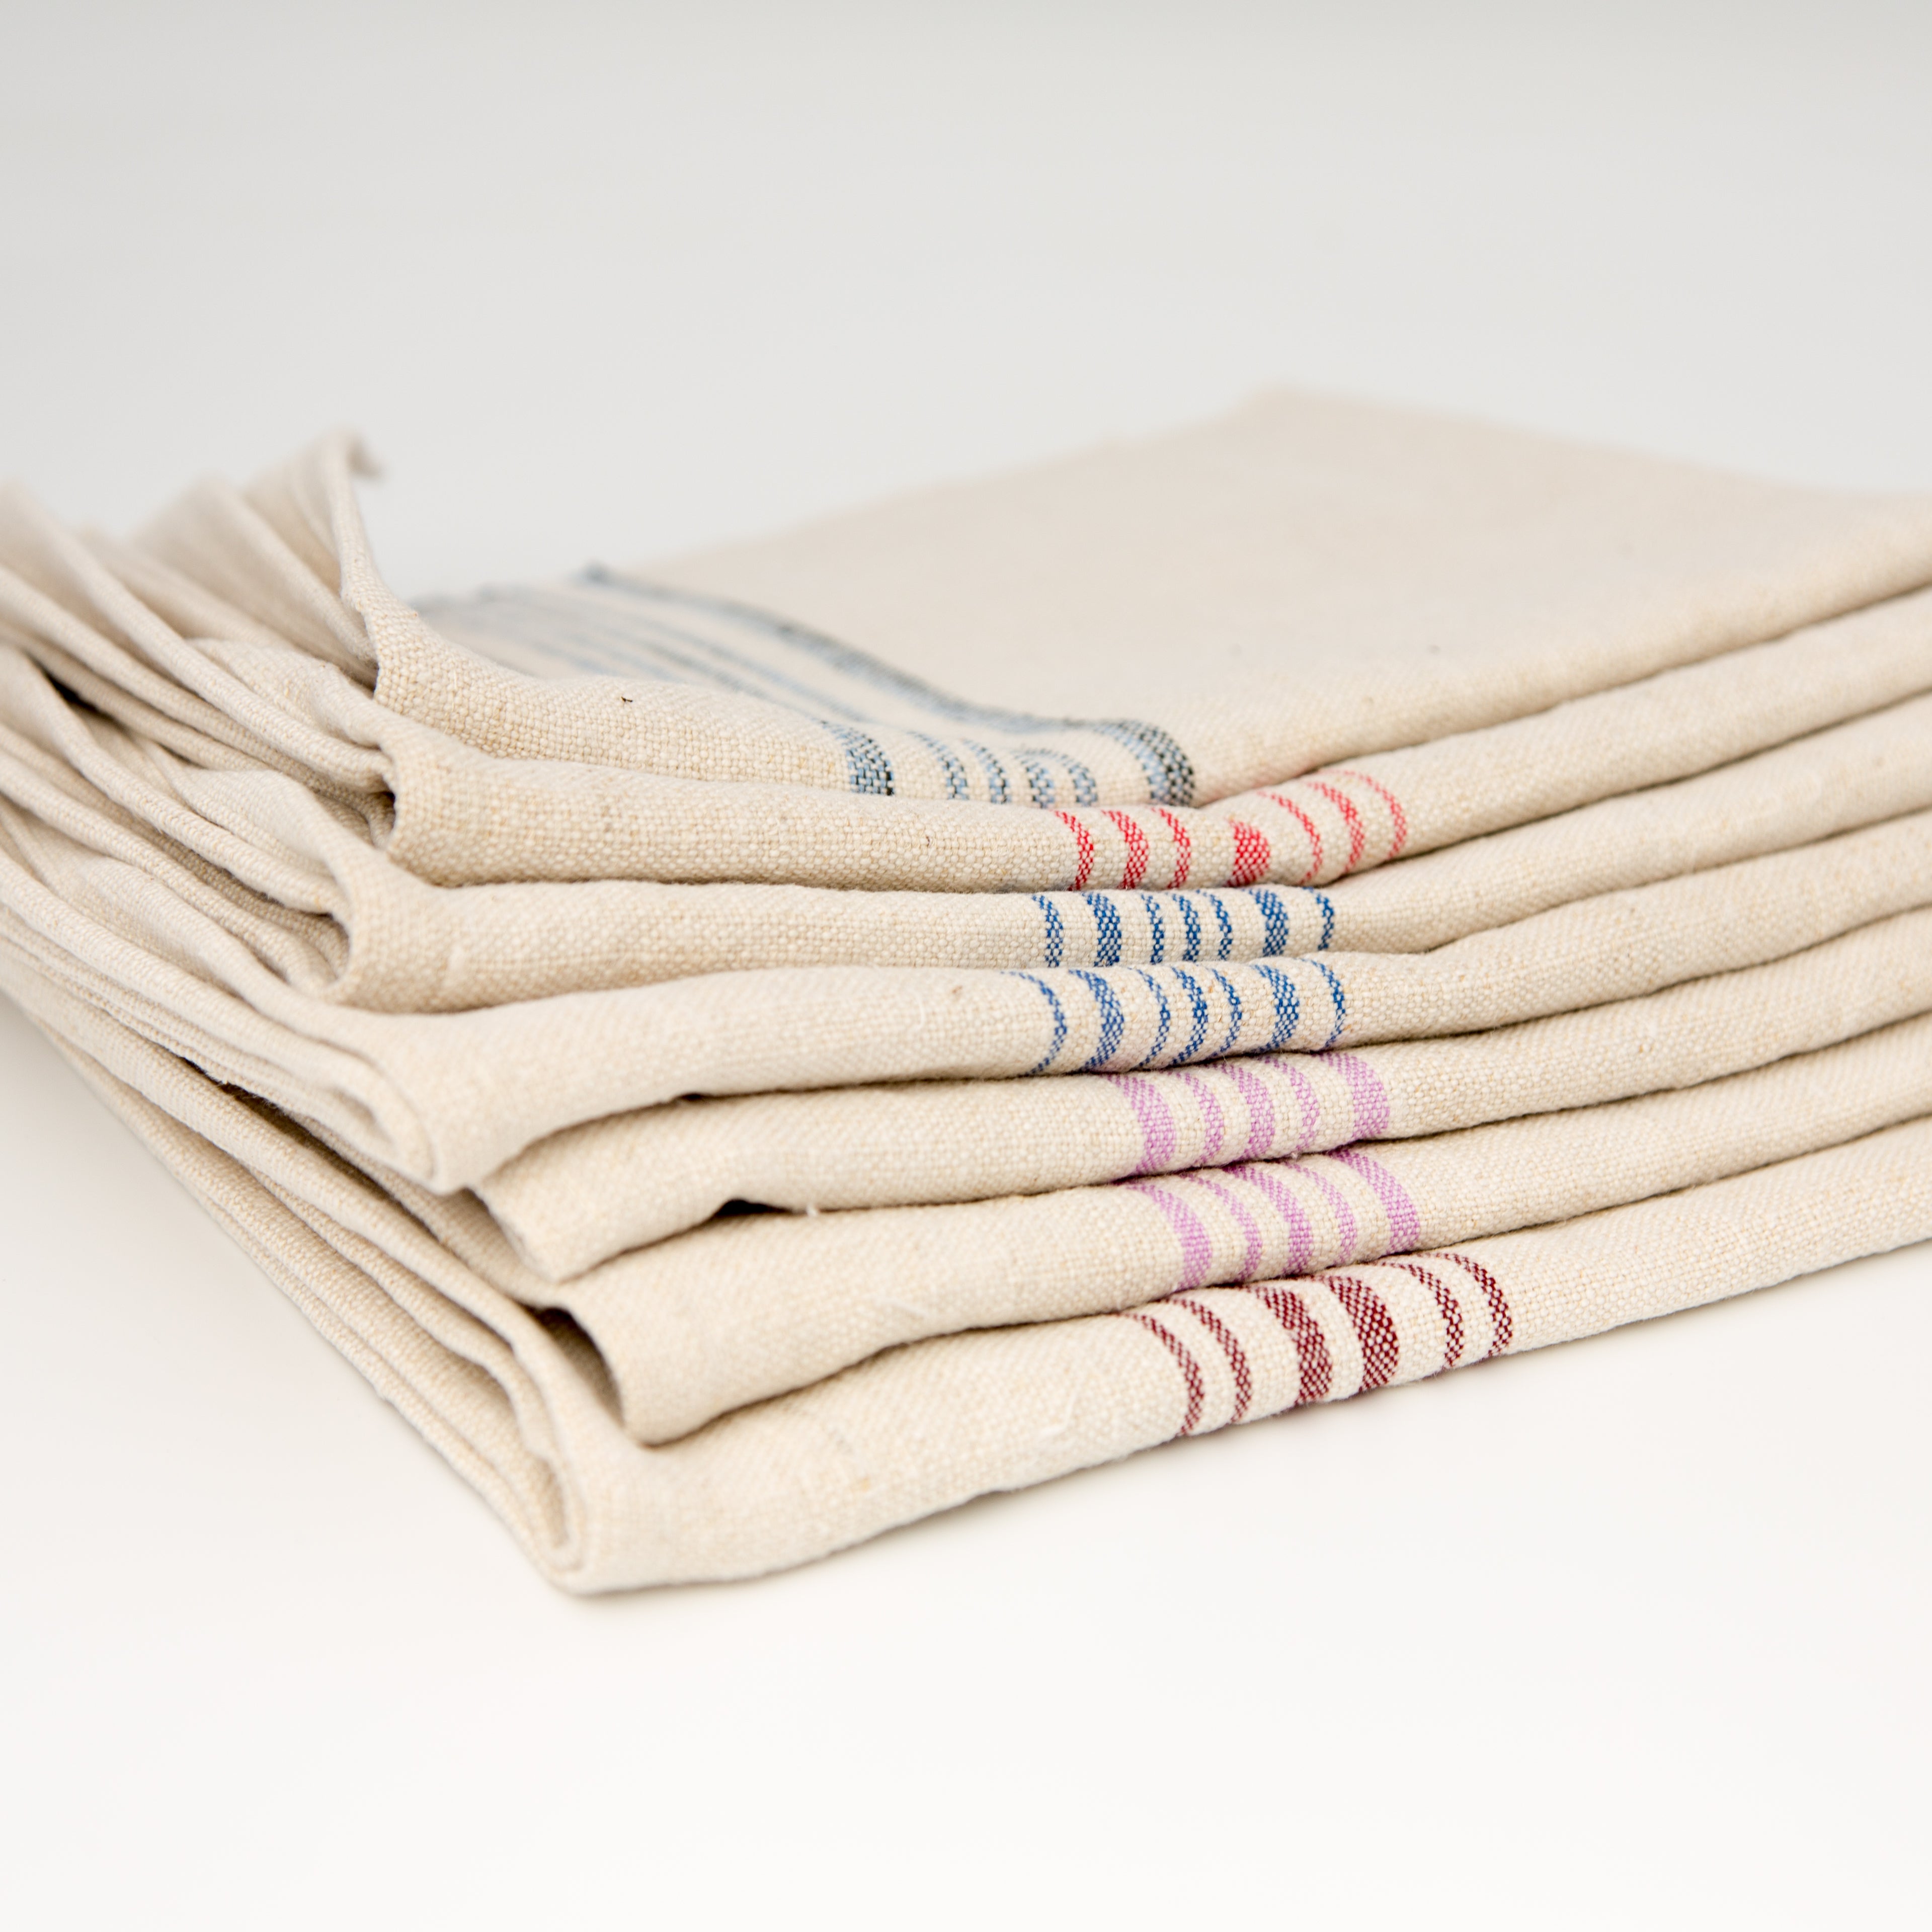 Vintage Striped Linen Kitchen Towels